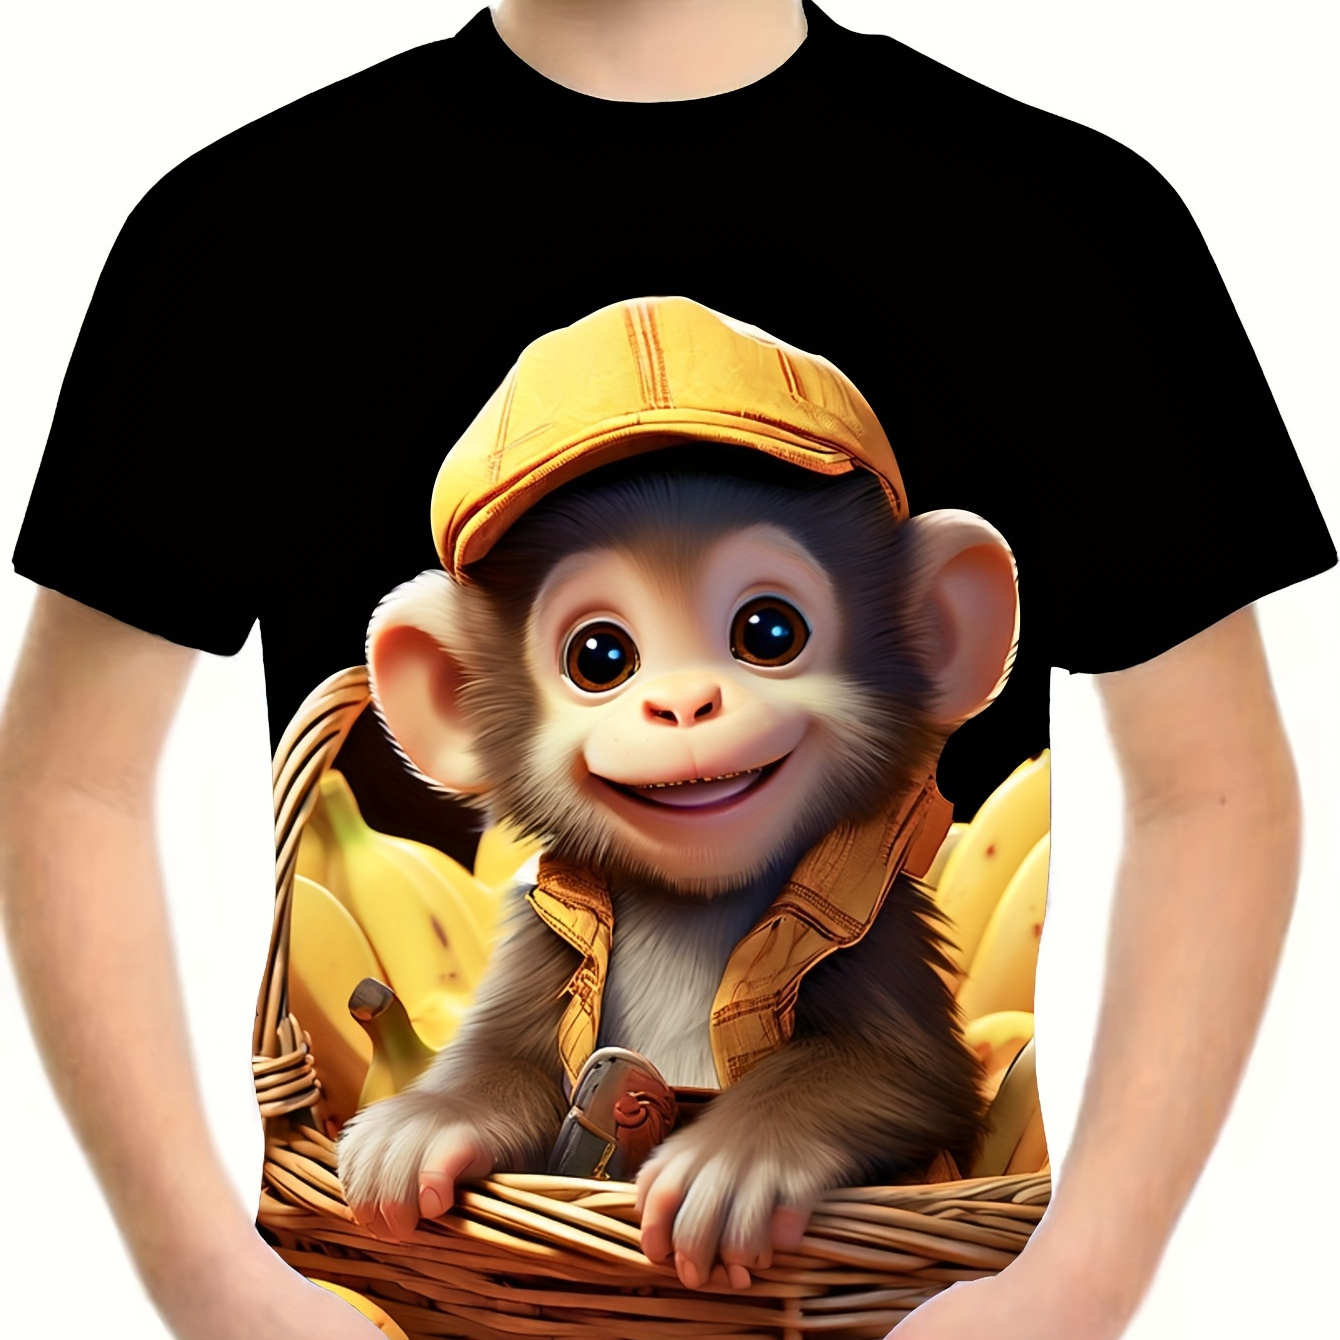 

Cartoon Monkey 3d Print T-shirt, Tees For Boys, Casual Short Sleeve T-shirt For Summer Spring Fall